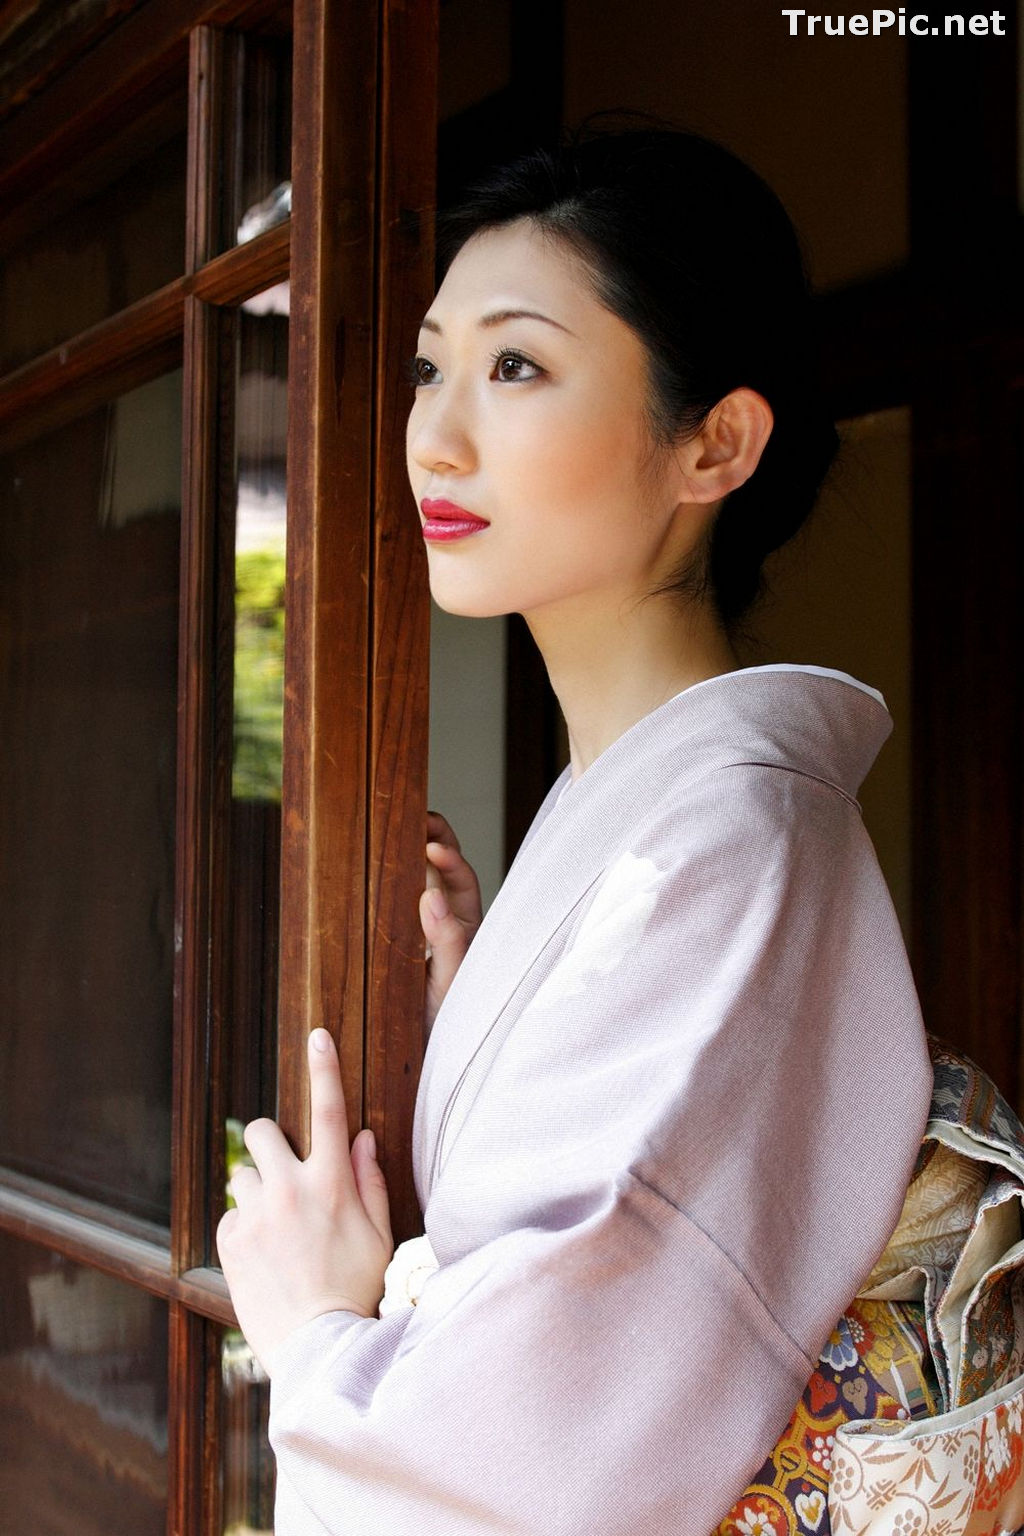 Image [YS Web] Vol.525 - Japanese Actress and Gravure Idol - Mitsu Dan - TruePic.net - Picture-72